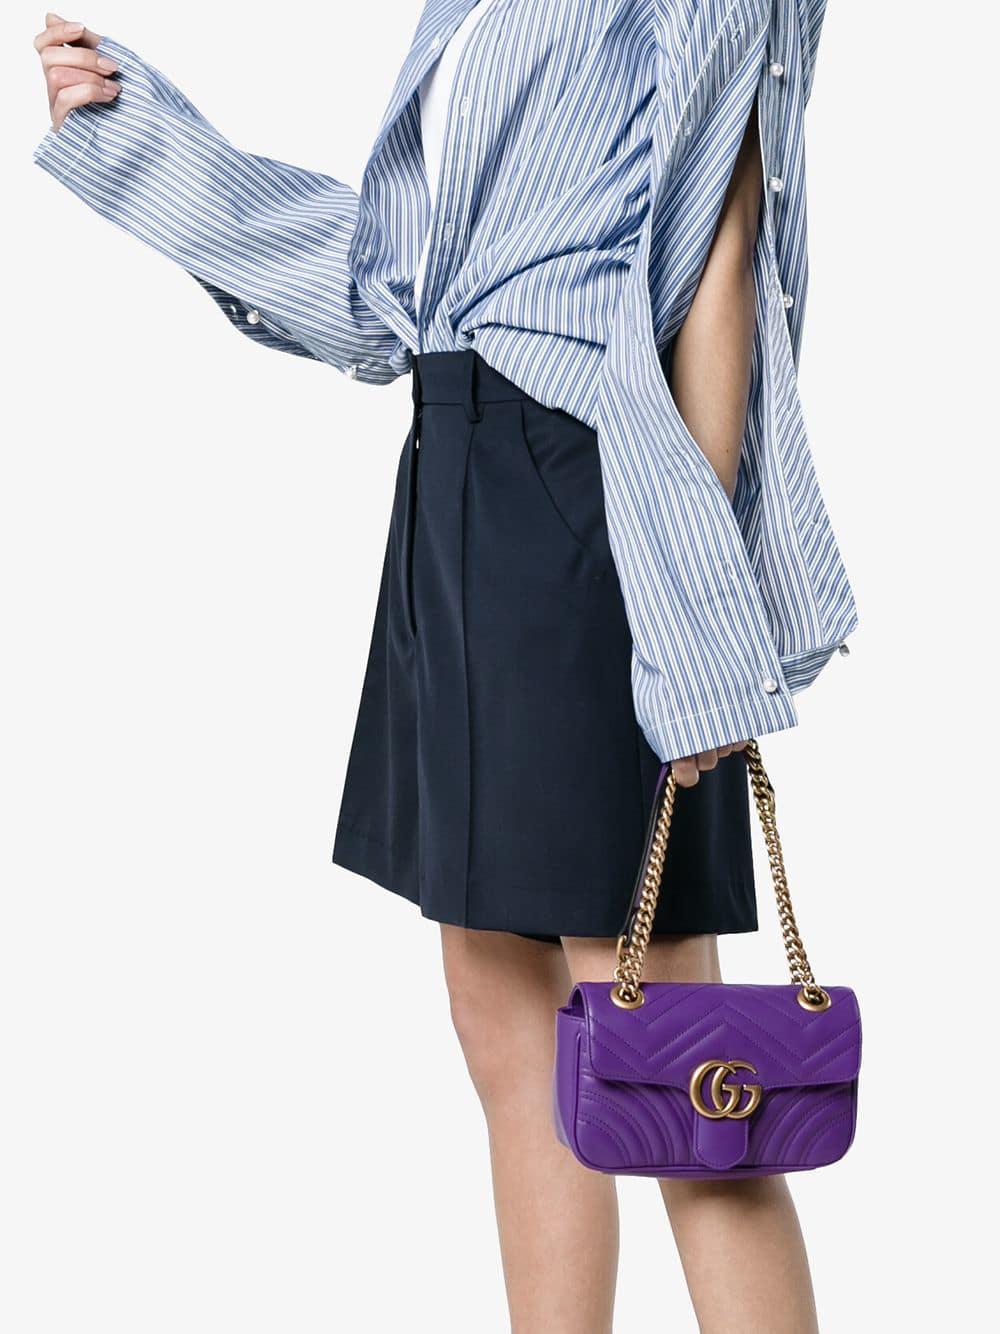 Gucci GG Marmont Medium Shoulder Bag in Purple